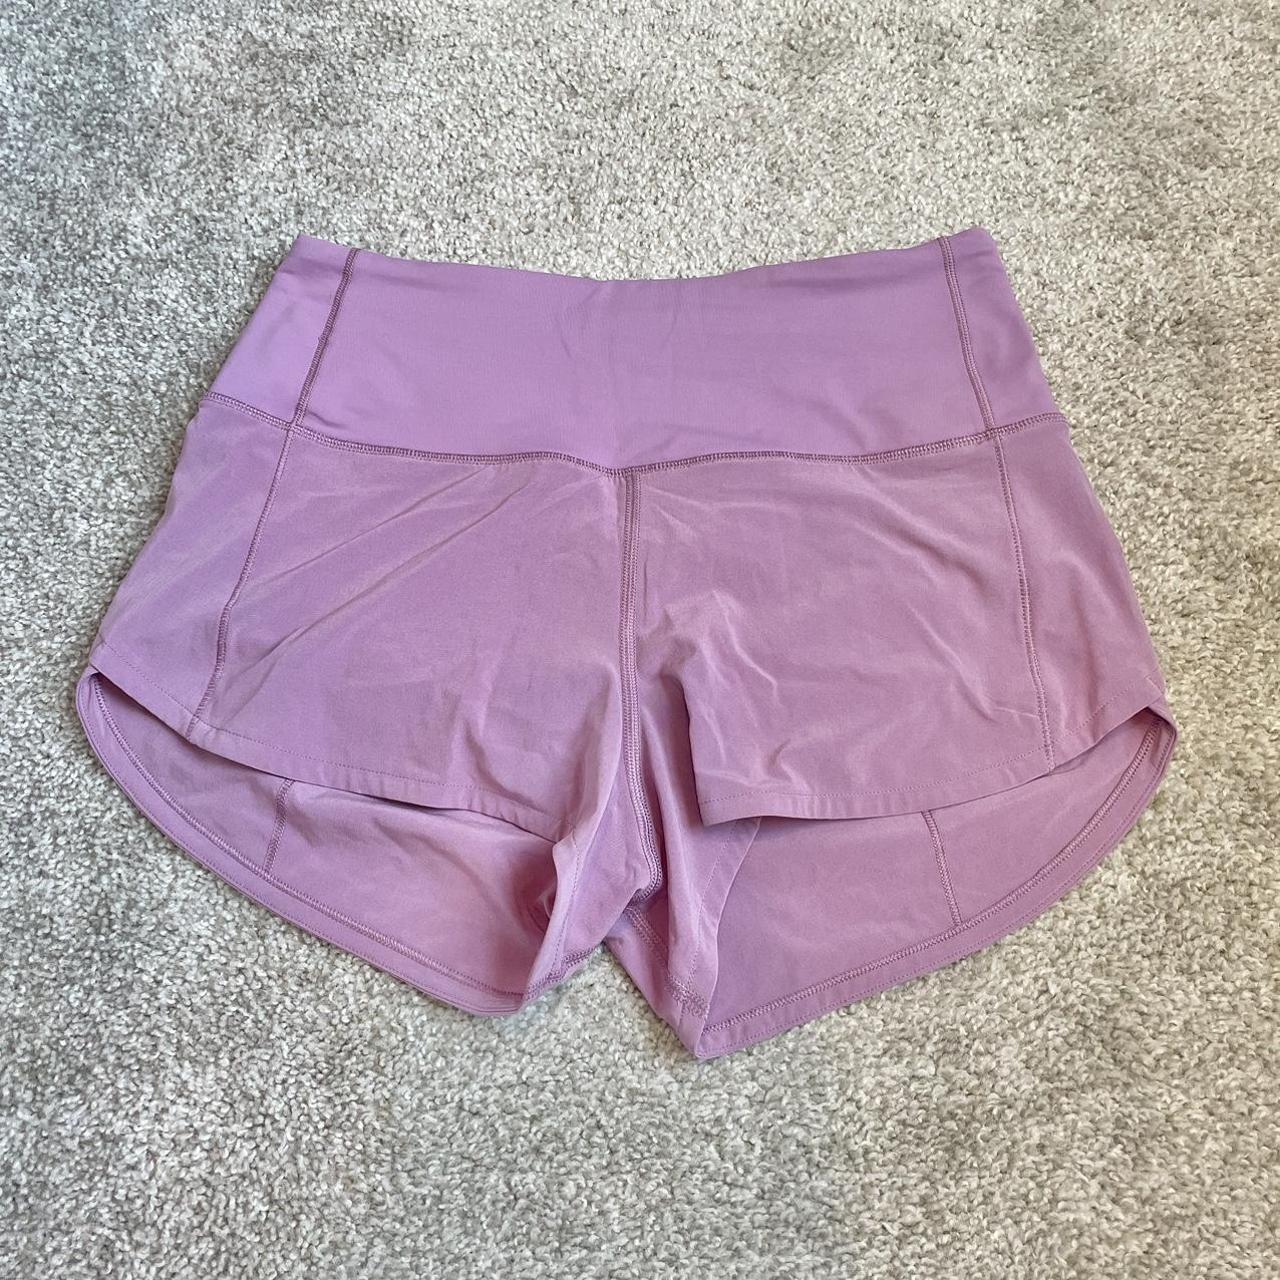 Lululemon Women's Purple and Pink Shorts | Depop